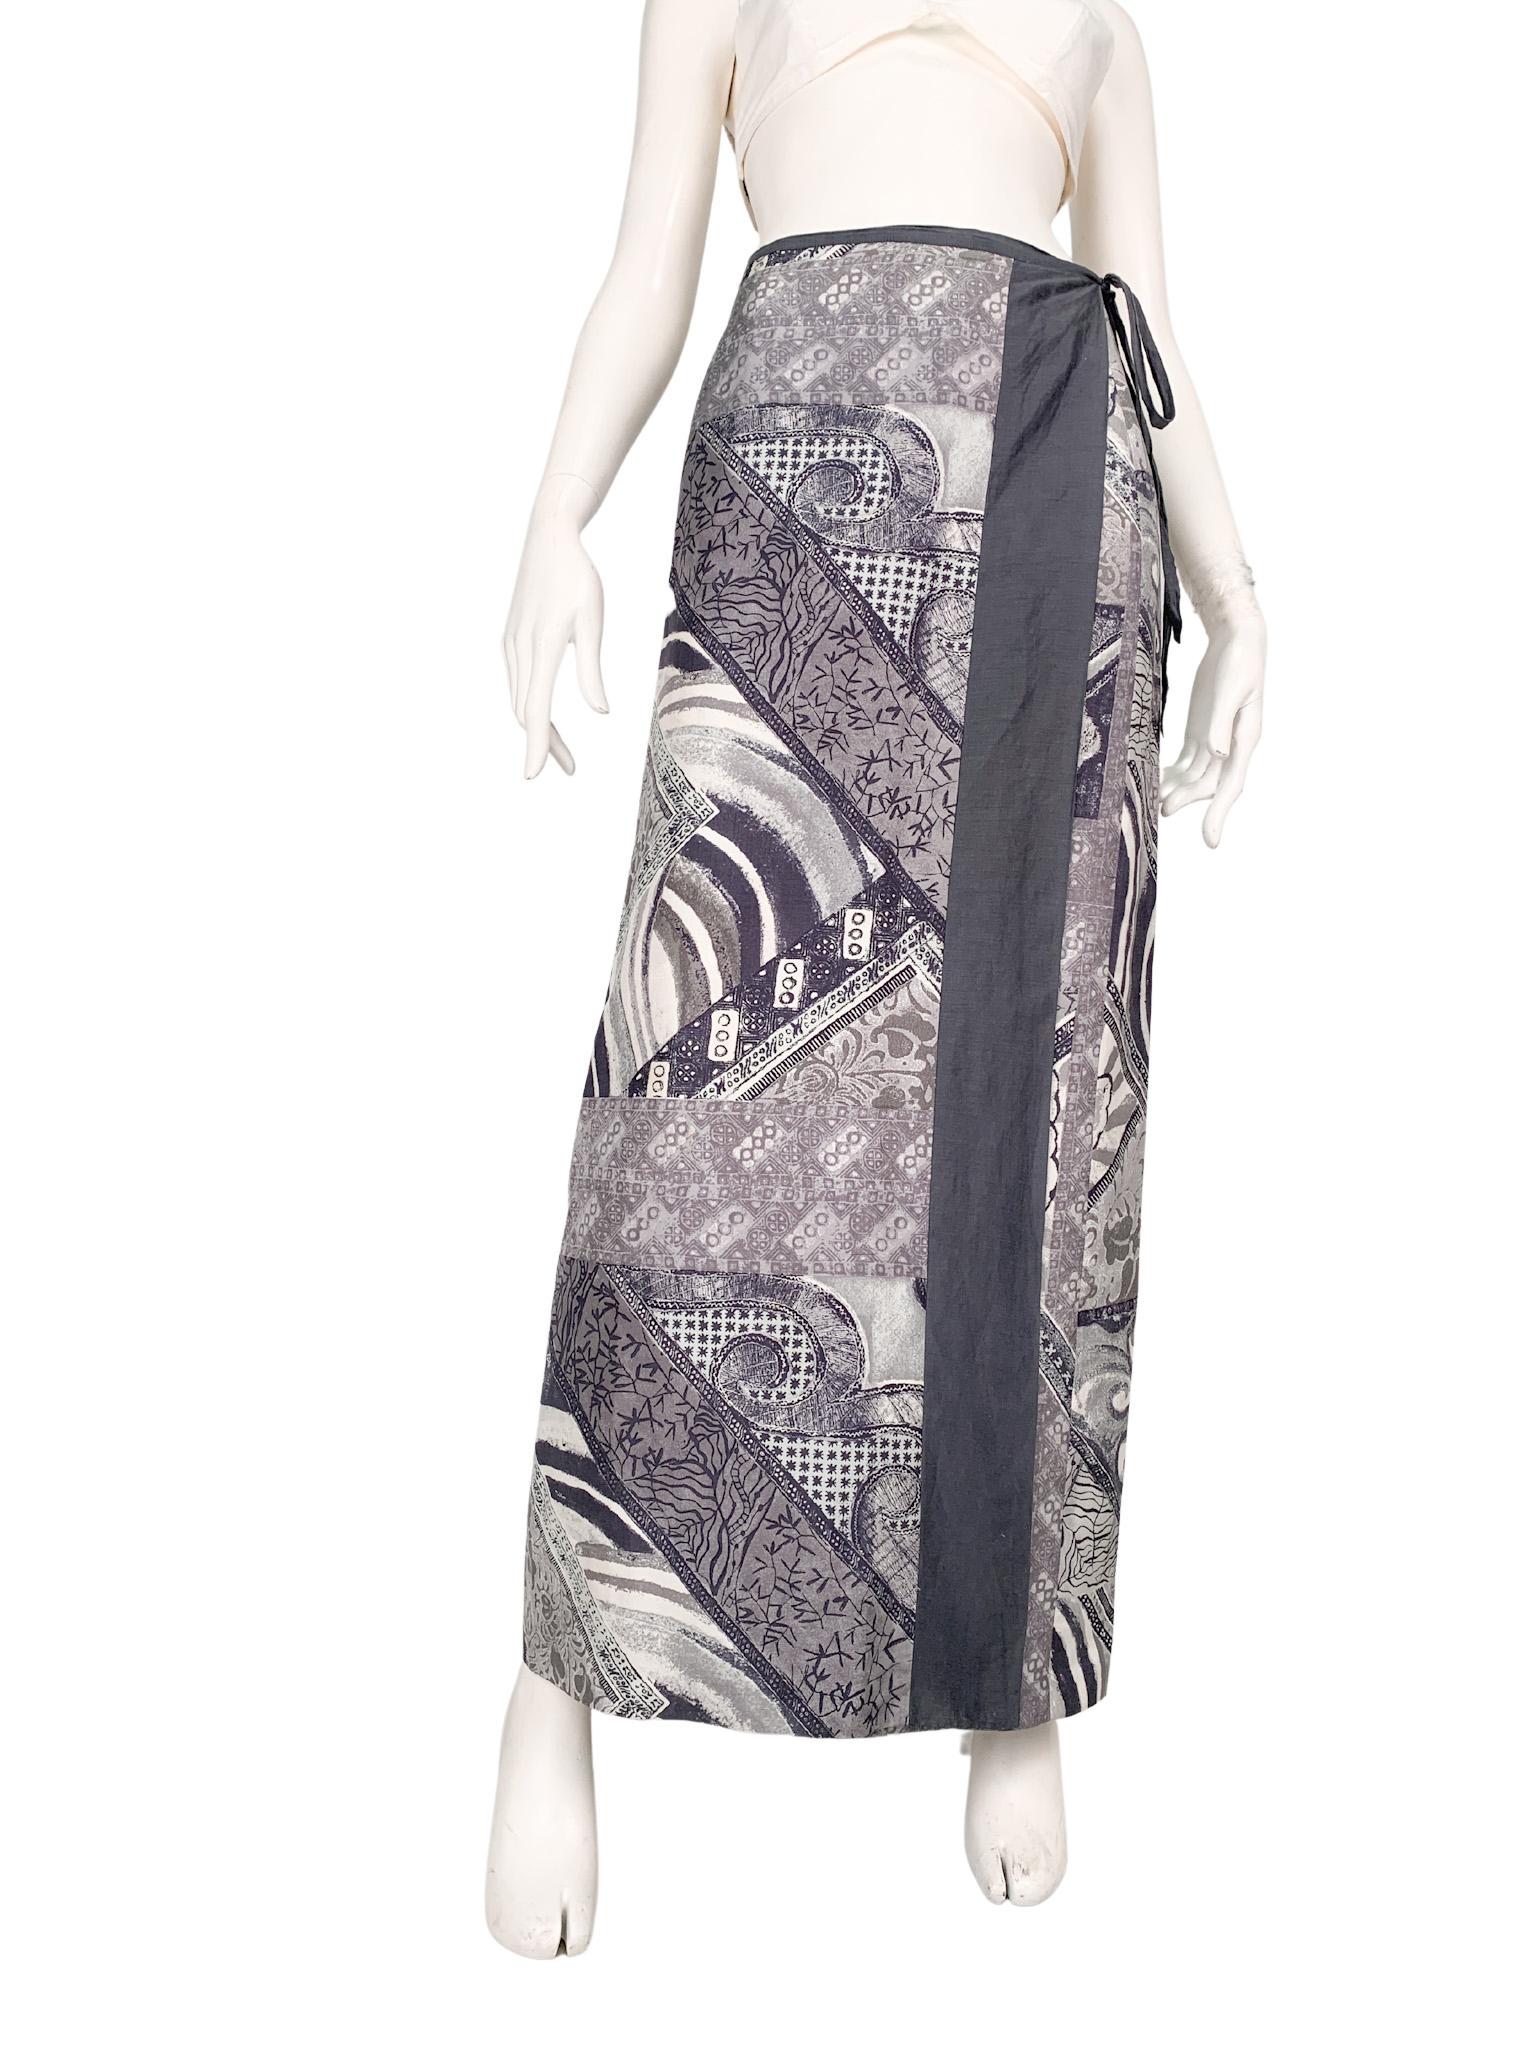 1990s Kenzo Jungle 100% silk metallic grey printed skirt and top ensemble 3